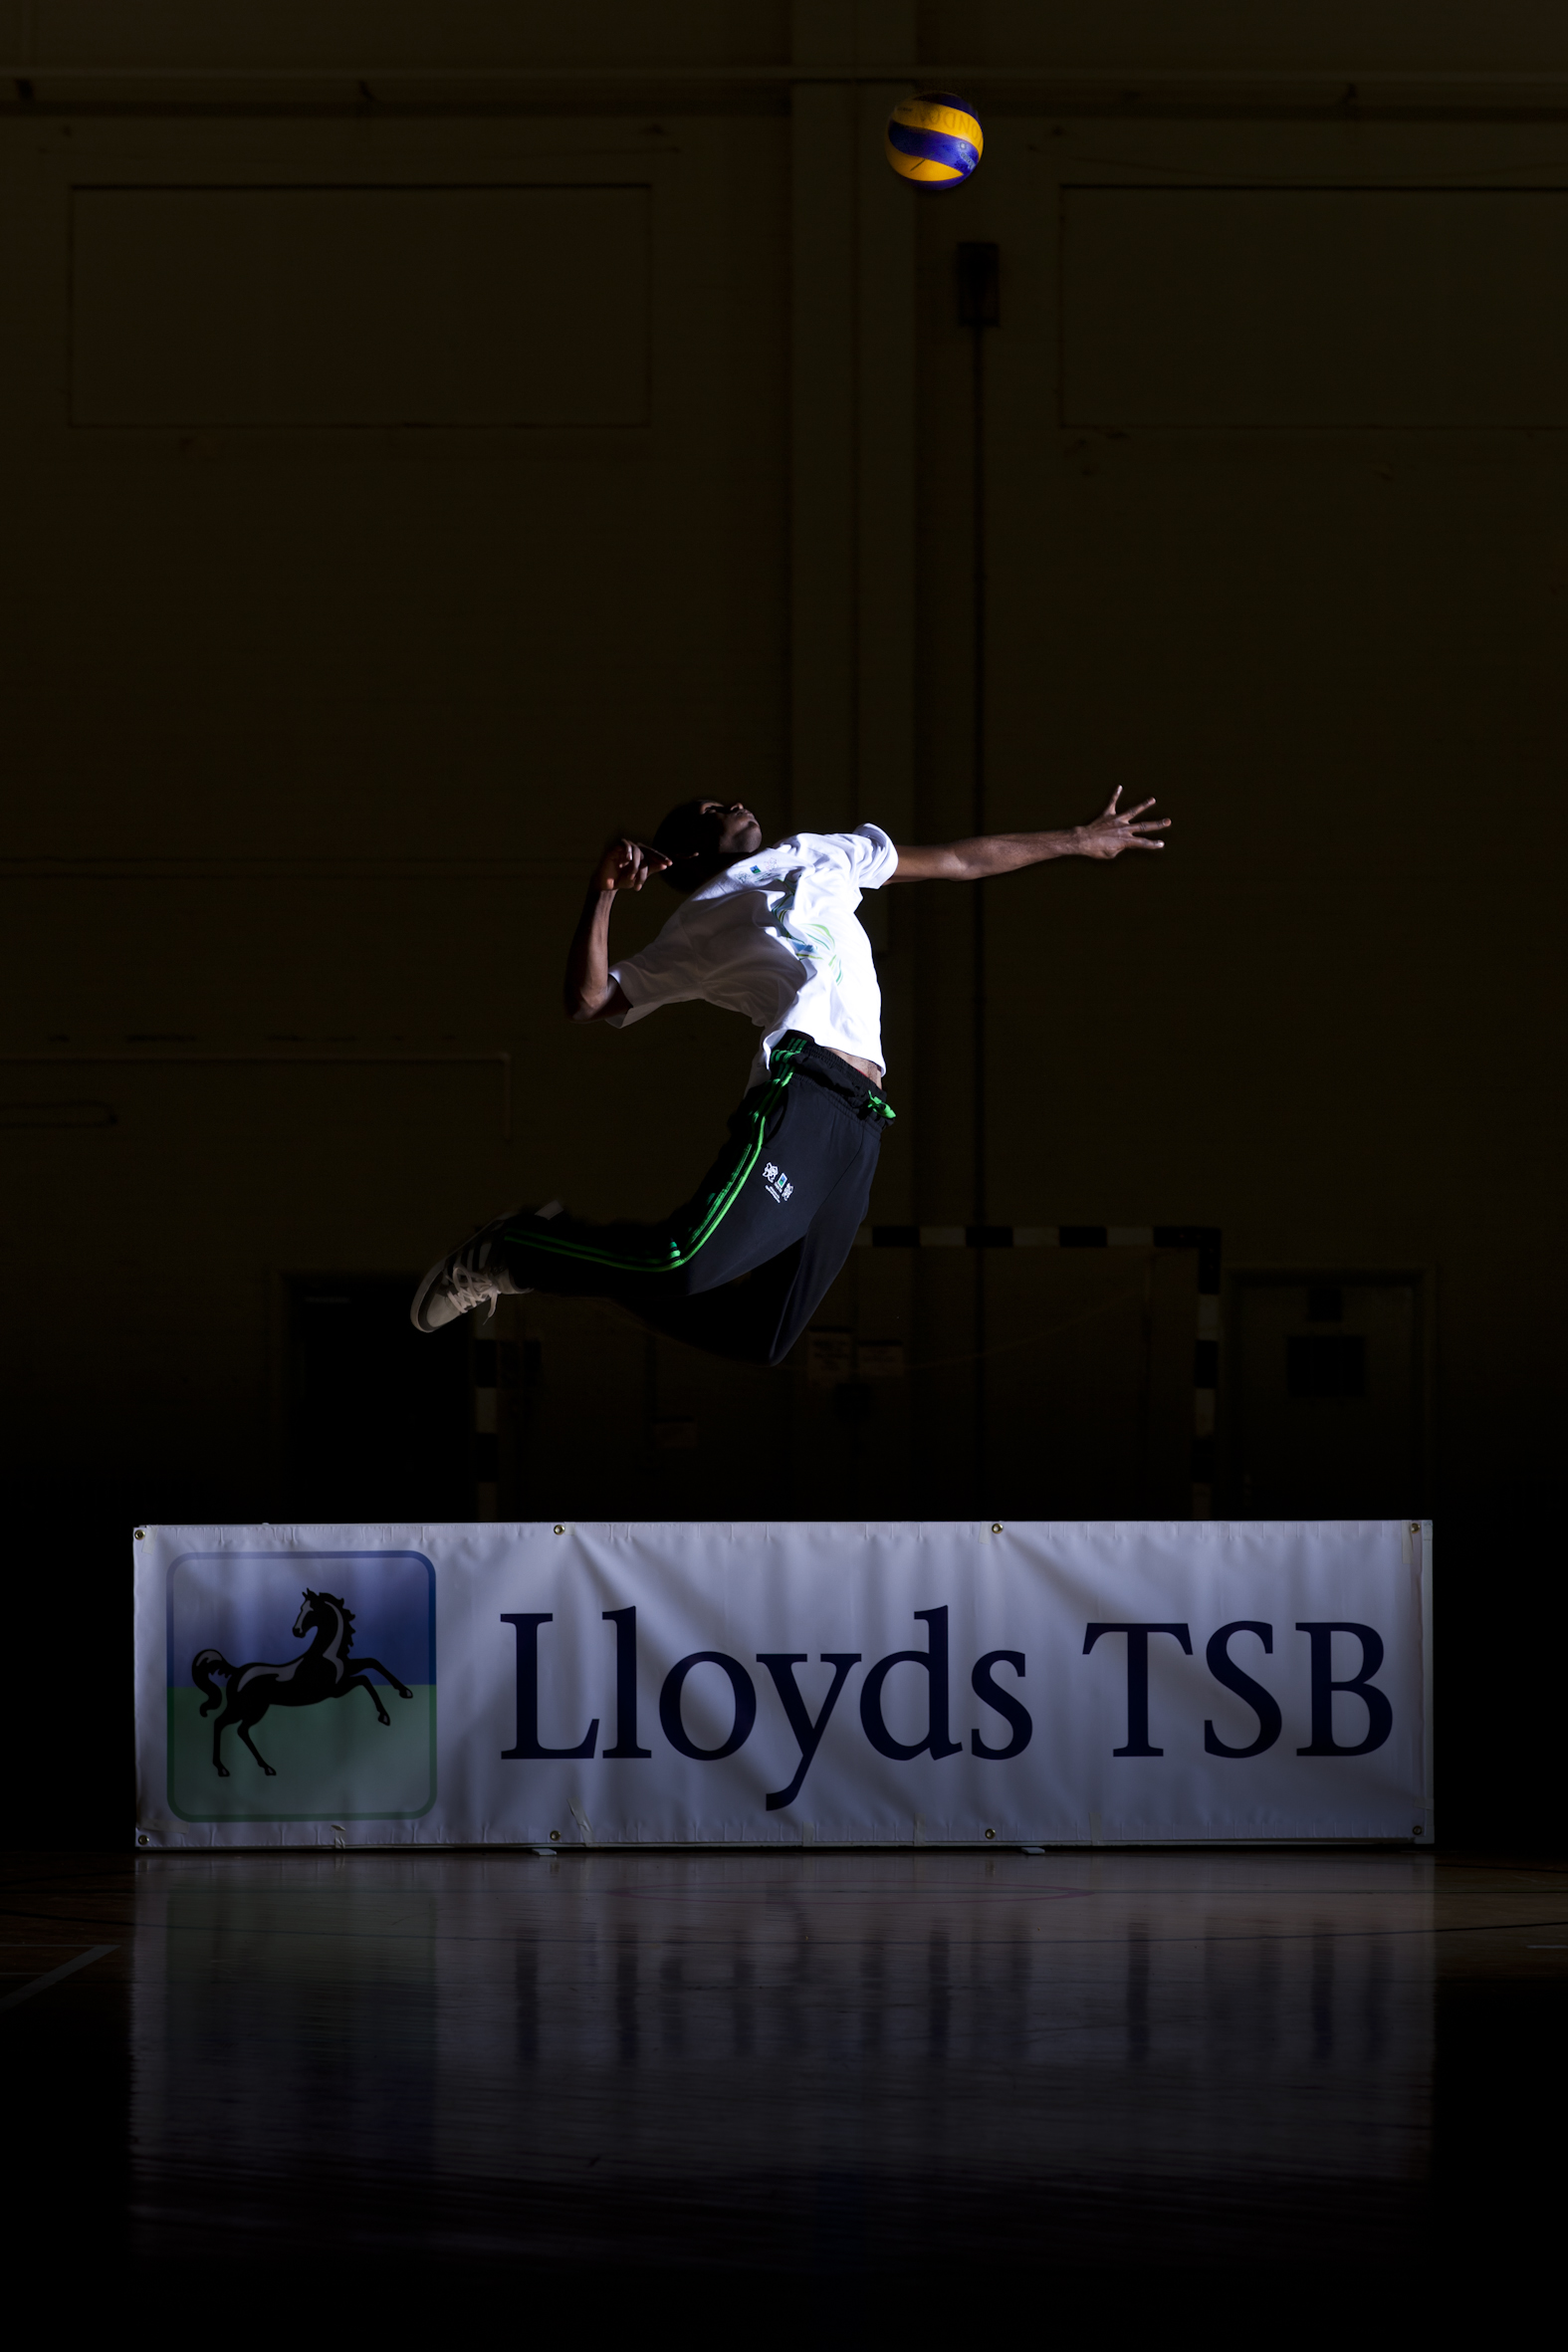 Lloyds_TSB_with_badminton_player